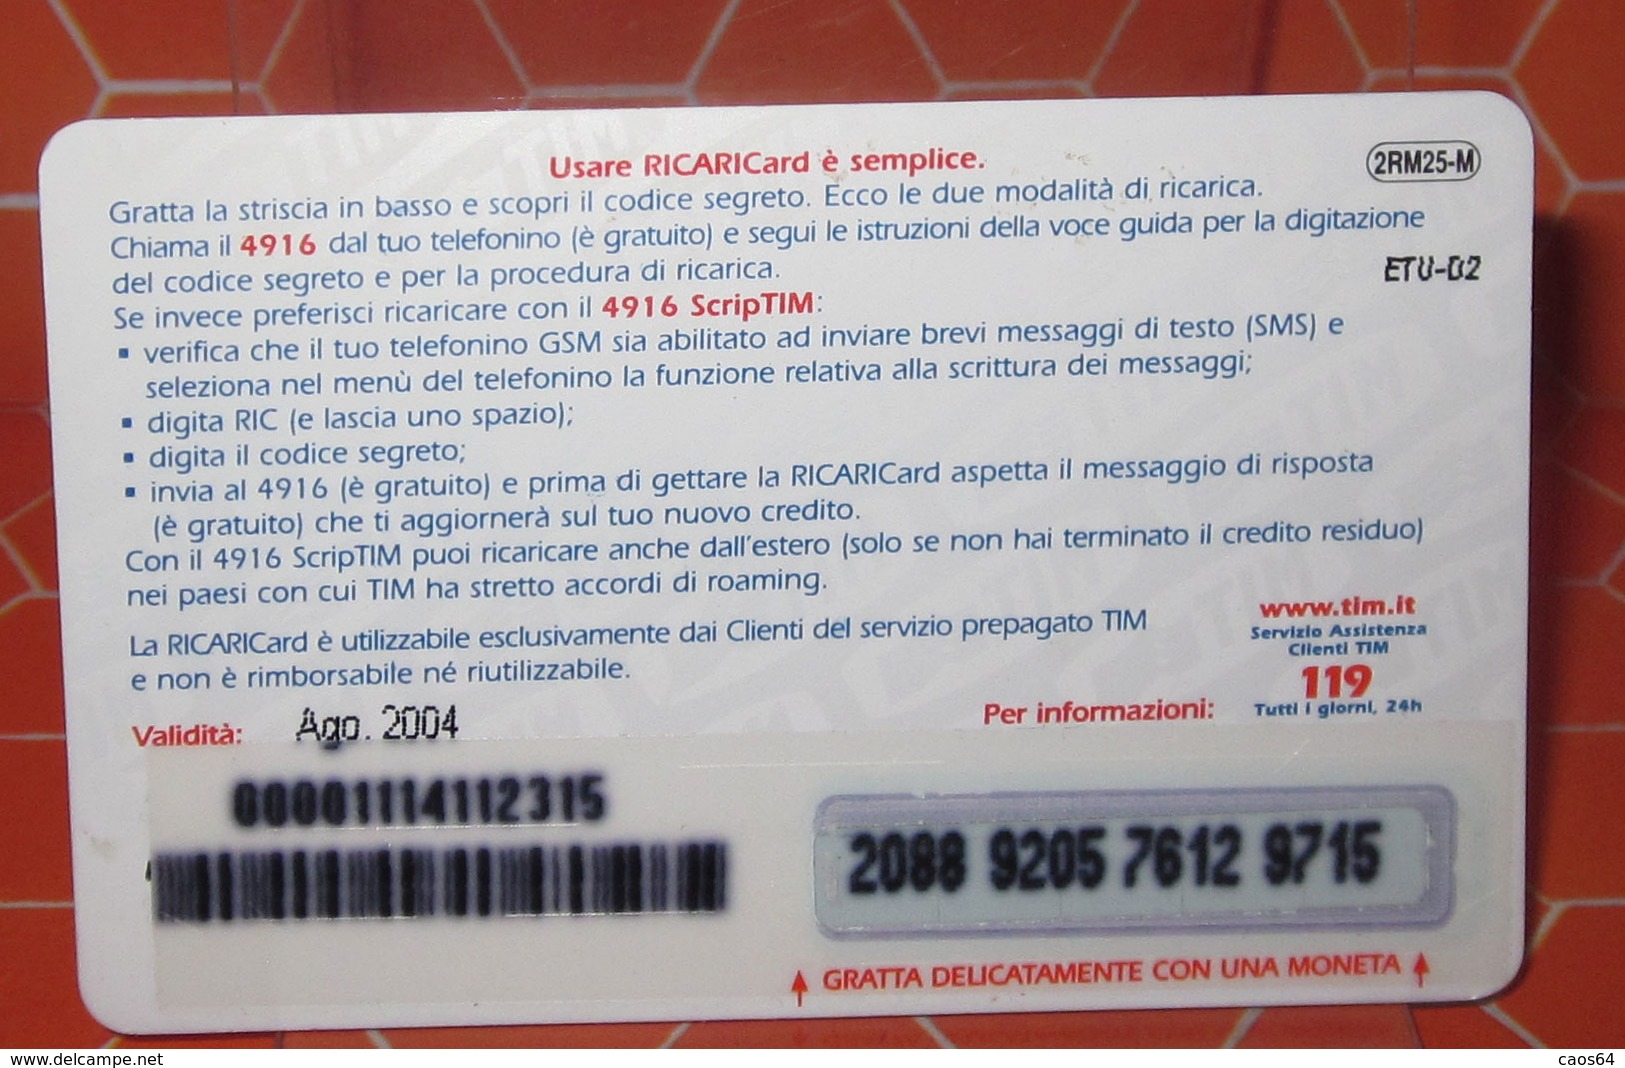 ROMA 2002  TIM € 25 TIM   SCHEDA  TELEFONICA PREPAGATA  USED - [2] Sim Cards, Prepaid & Refills